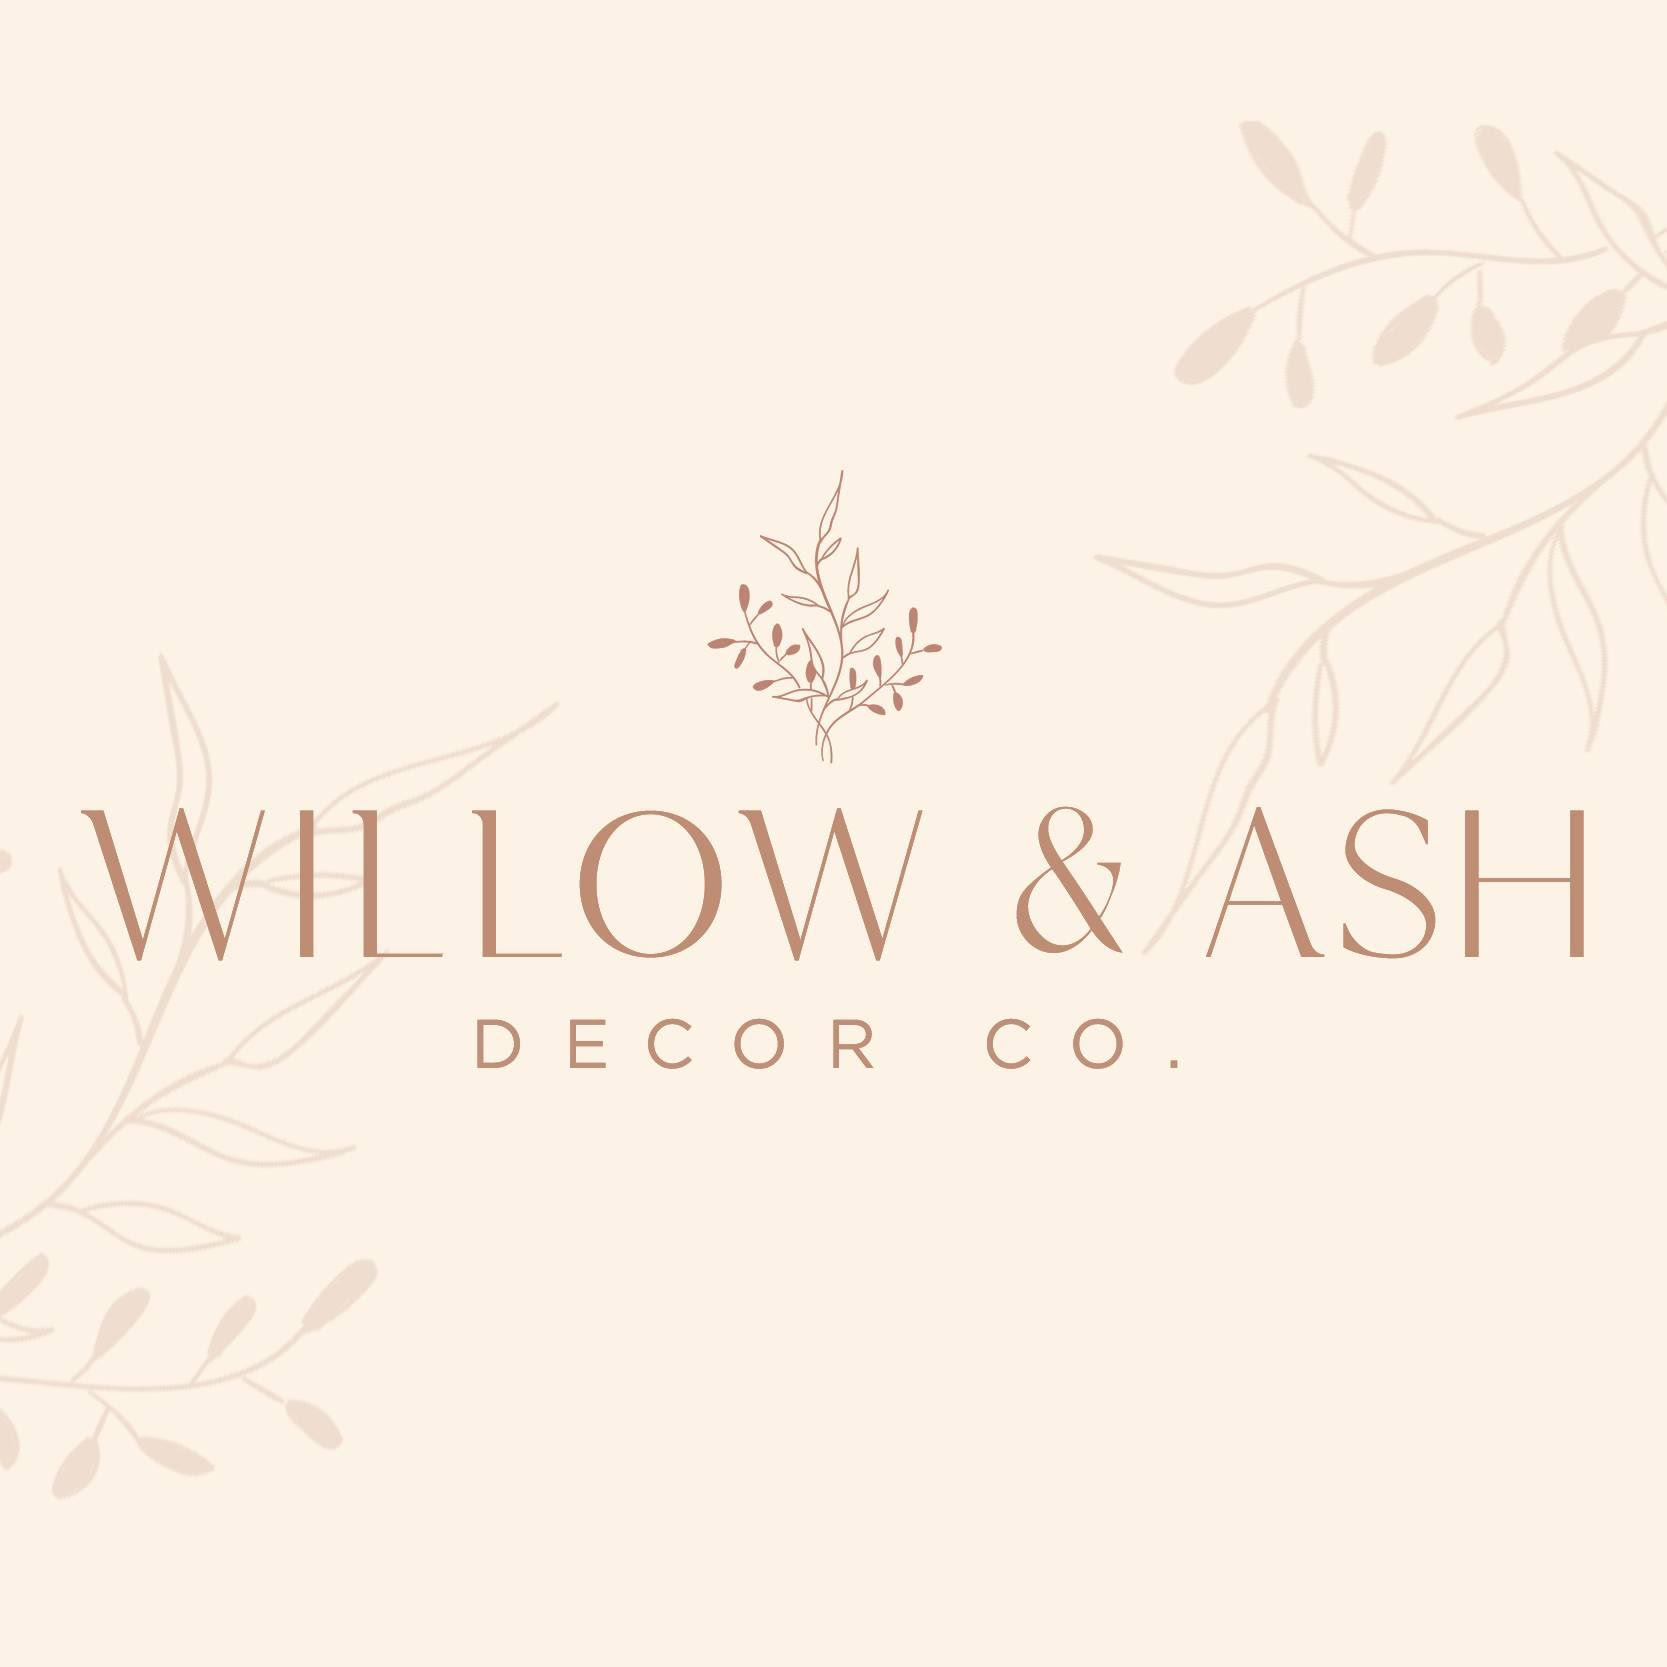 Willow & Ash Decor Co.